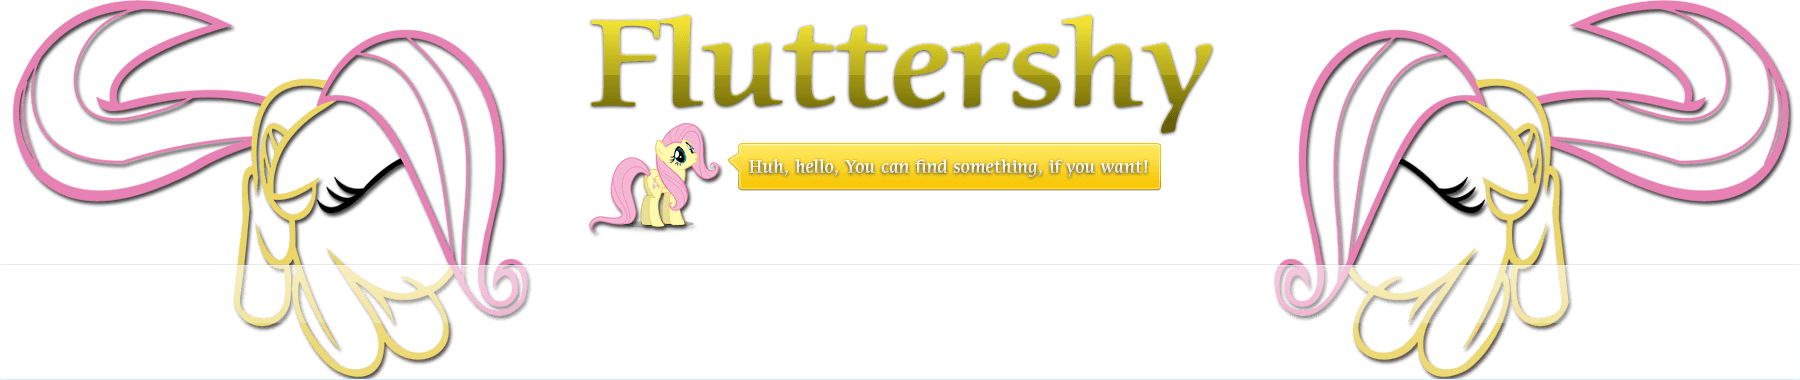 Fluttershy Logo - Custom Google Logo (Fluttershy on Google)